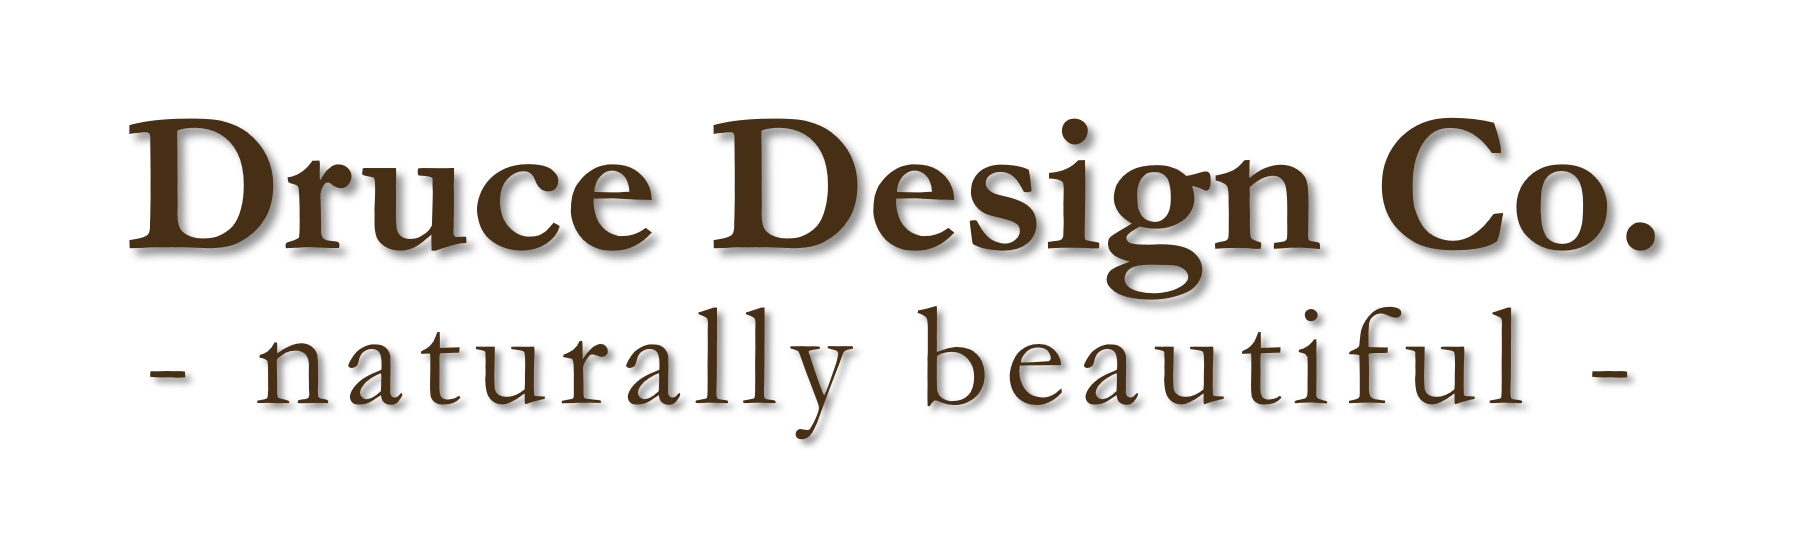 Druce Design Co.